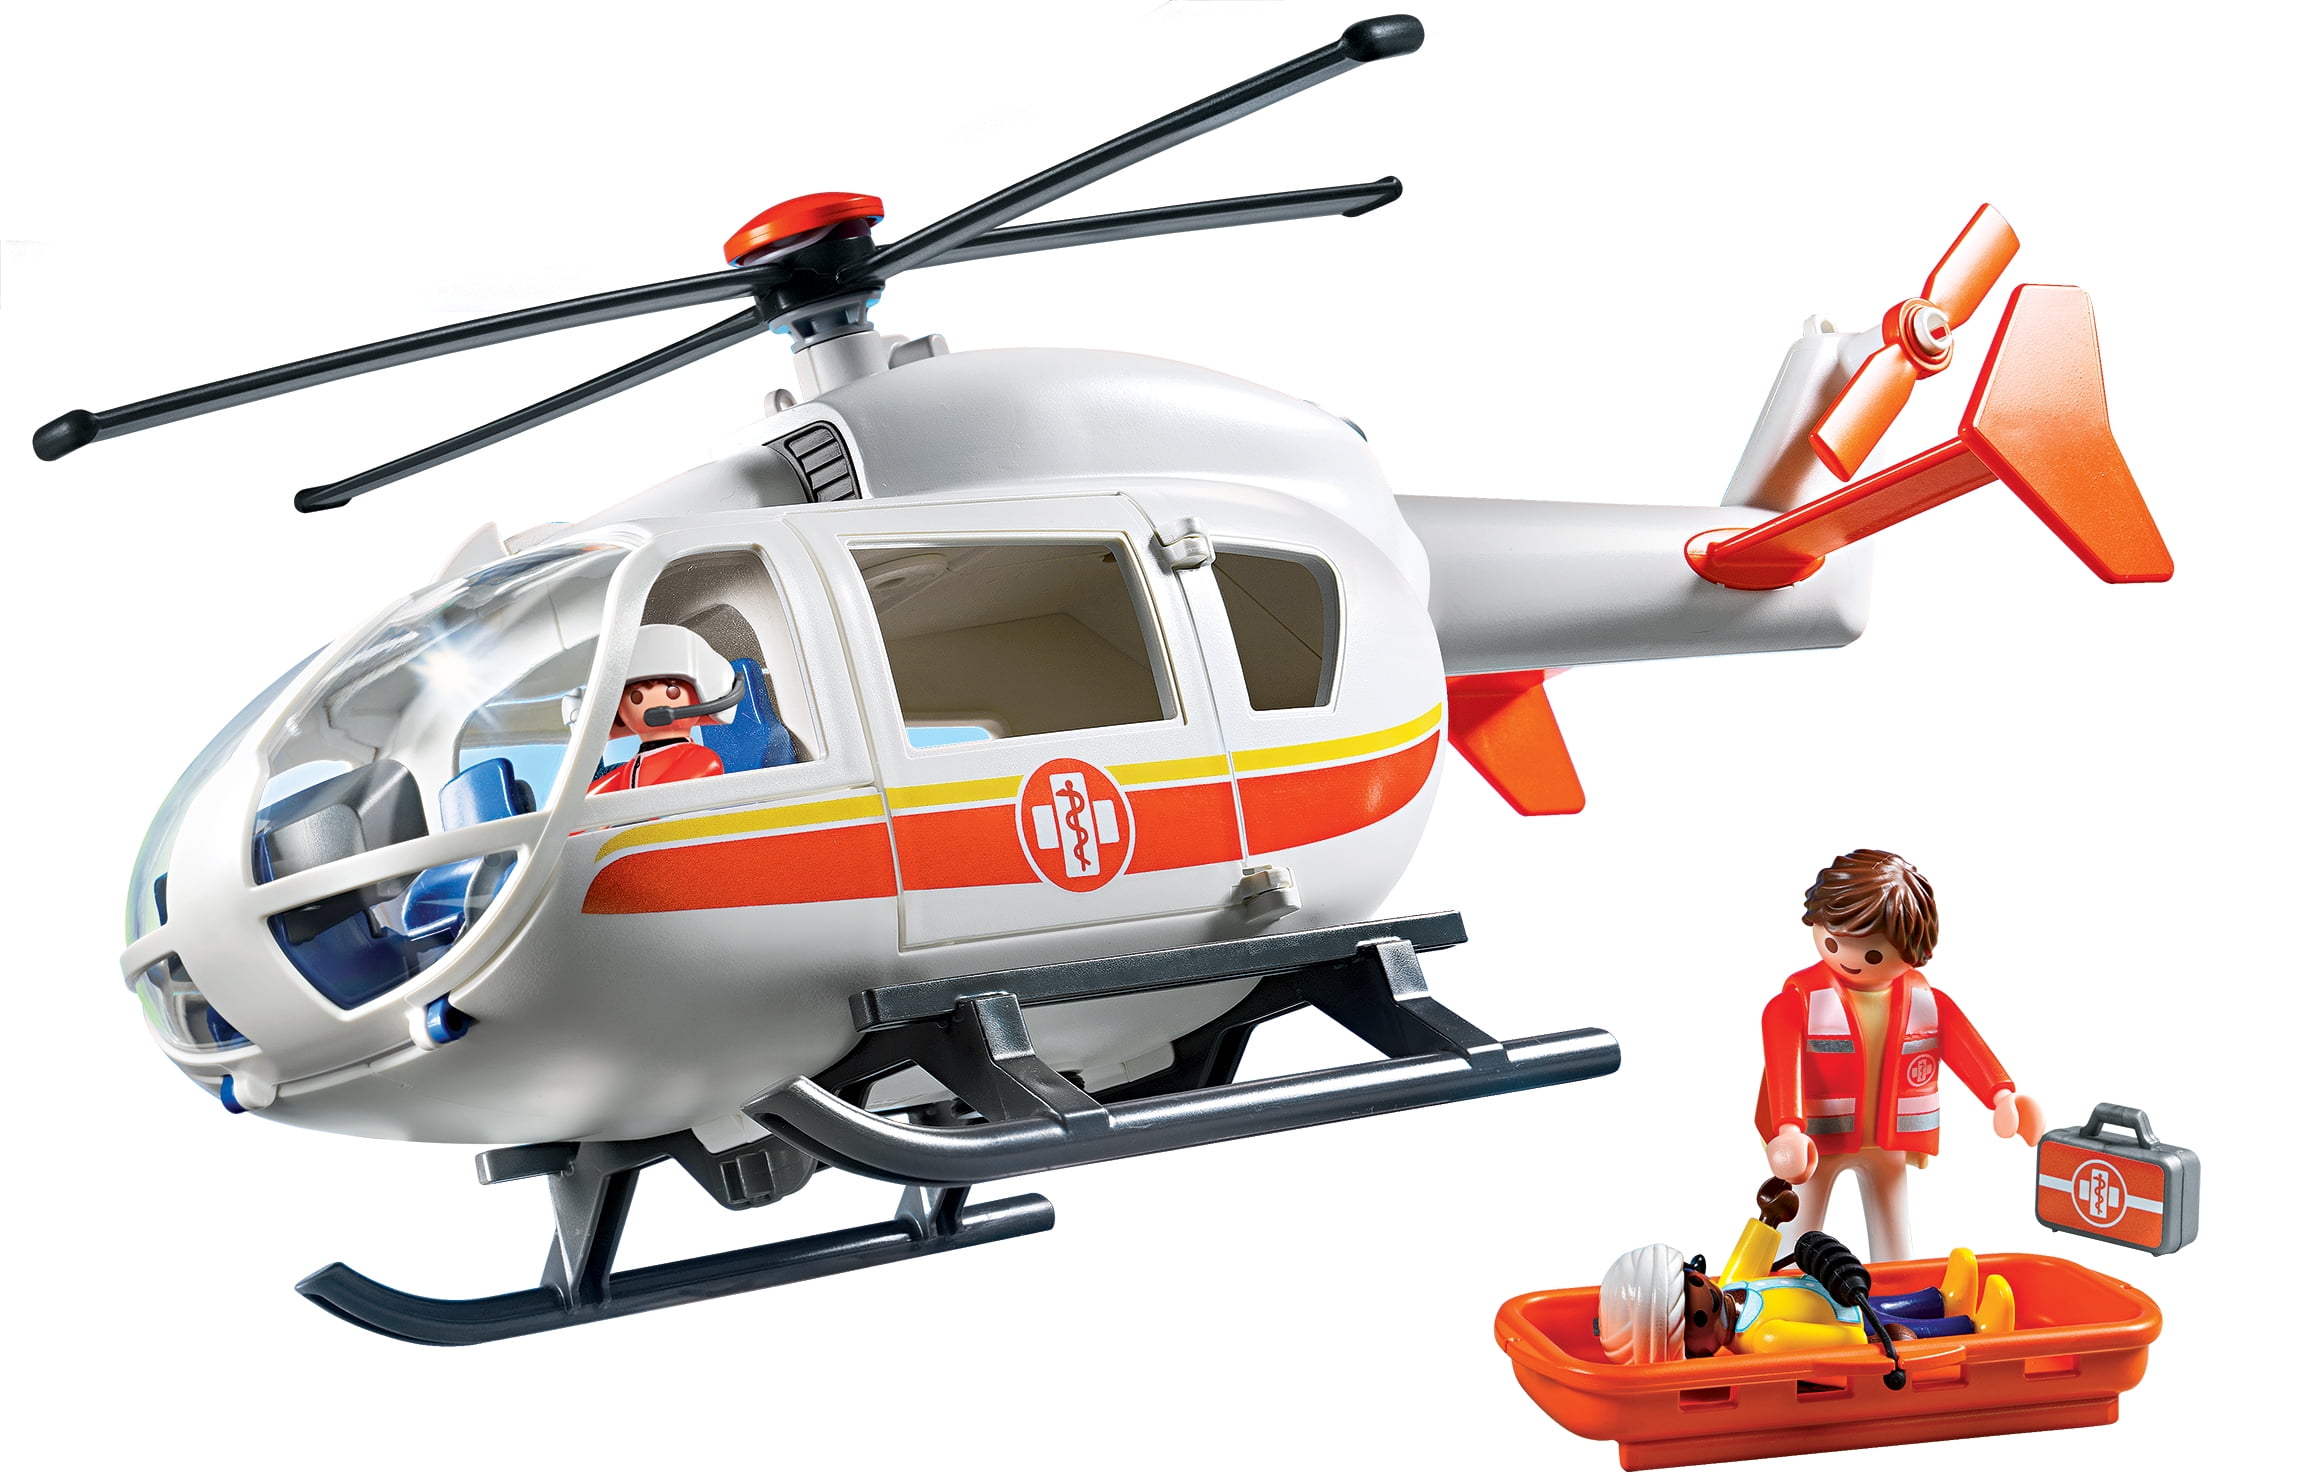 PLAYMOBIL Emergency Medical Helicopter Playmobil Cranbury 6686